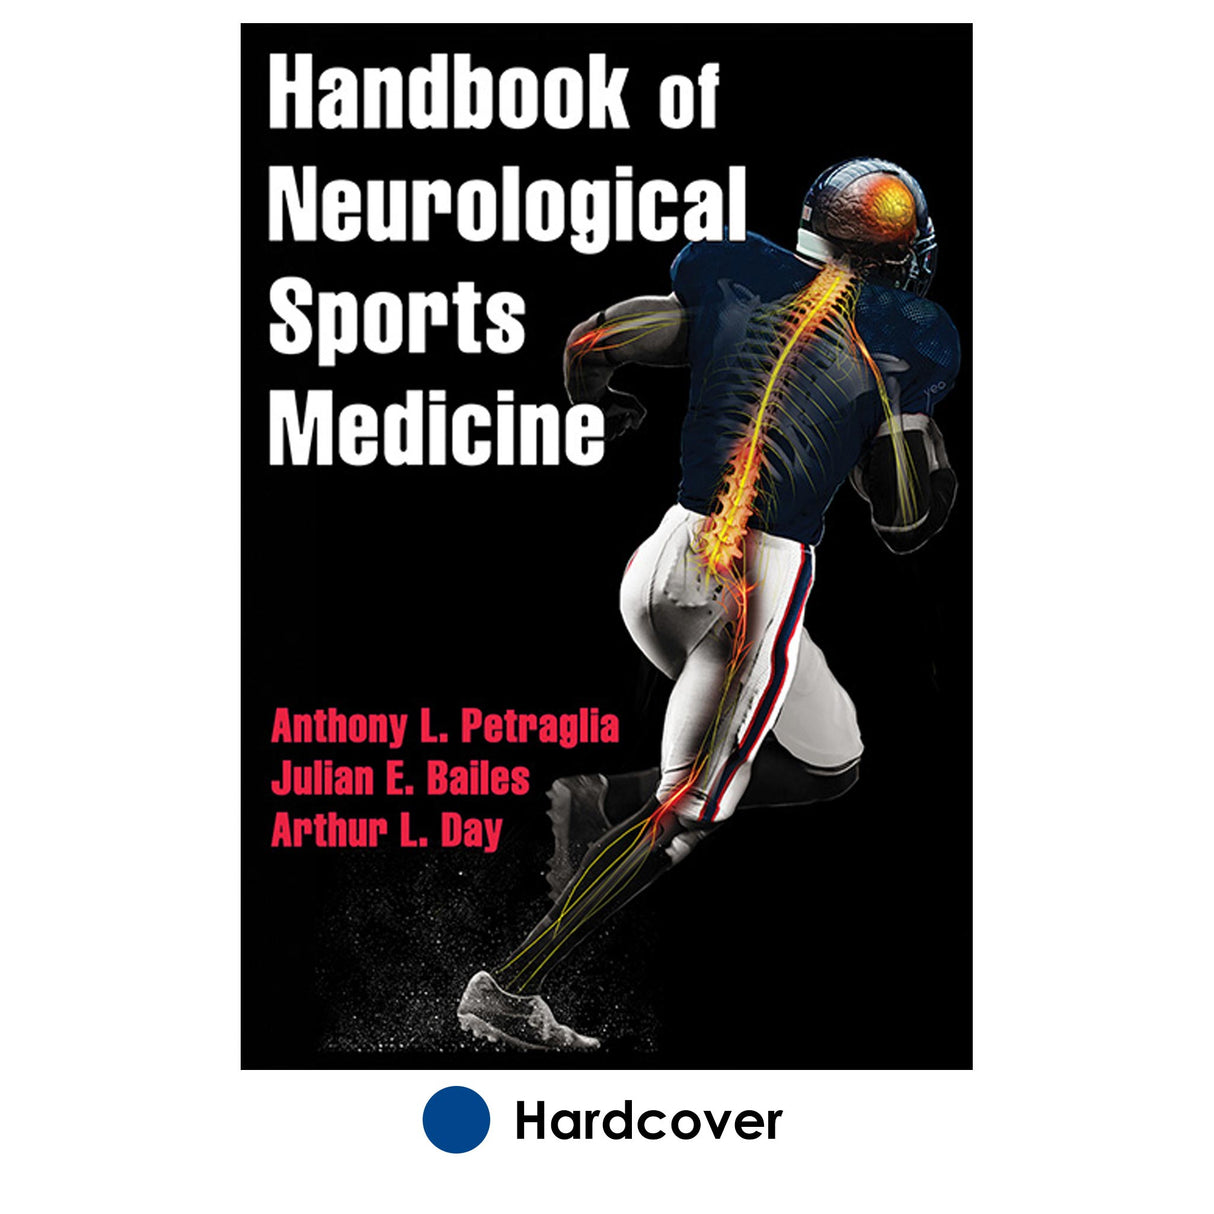 Handbook of Neurological Sports Medicine